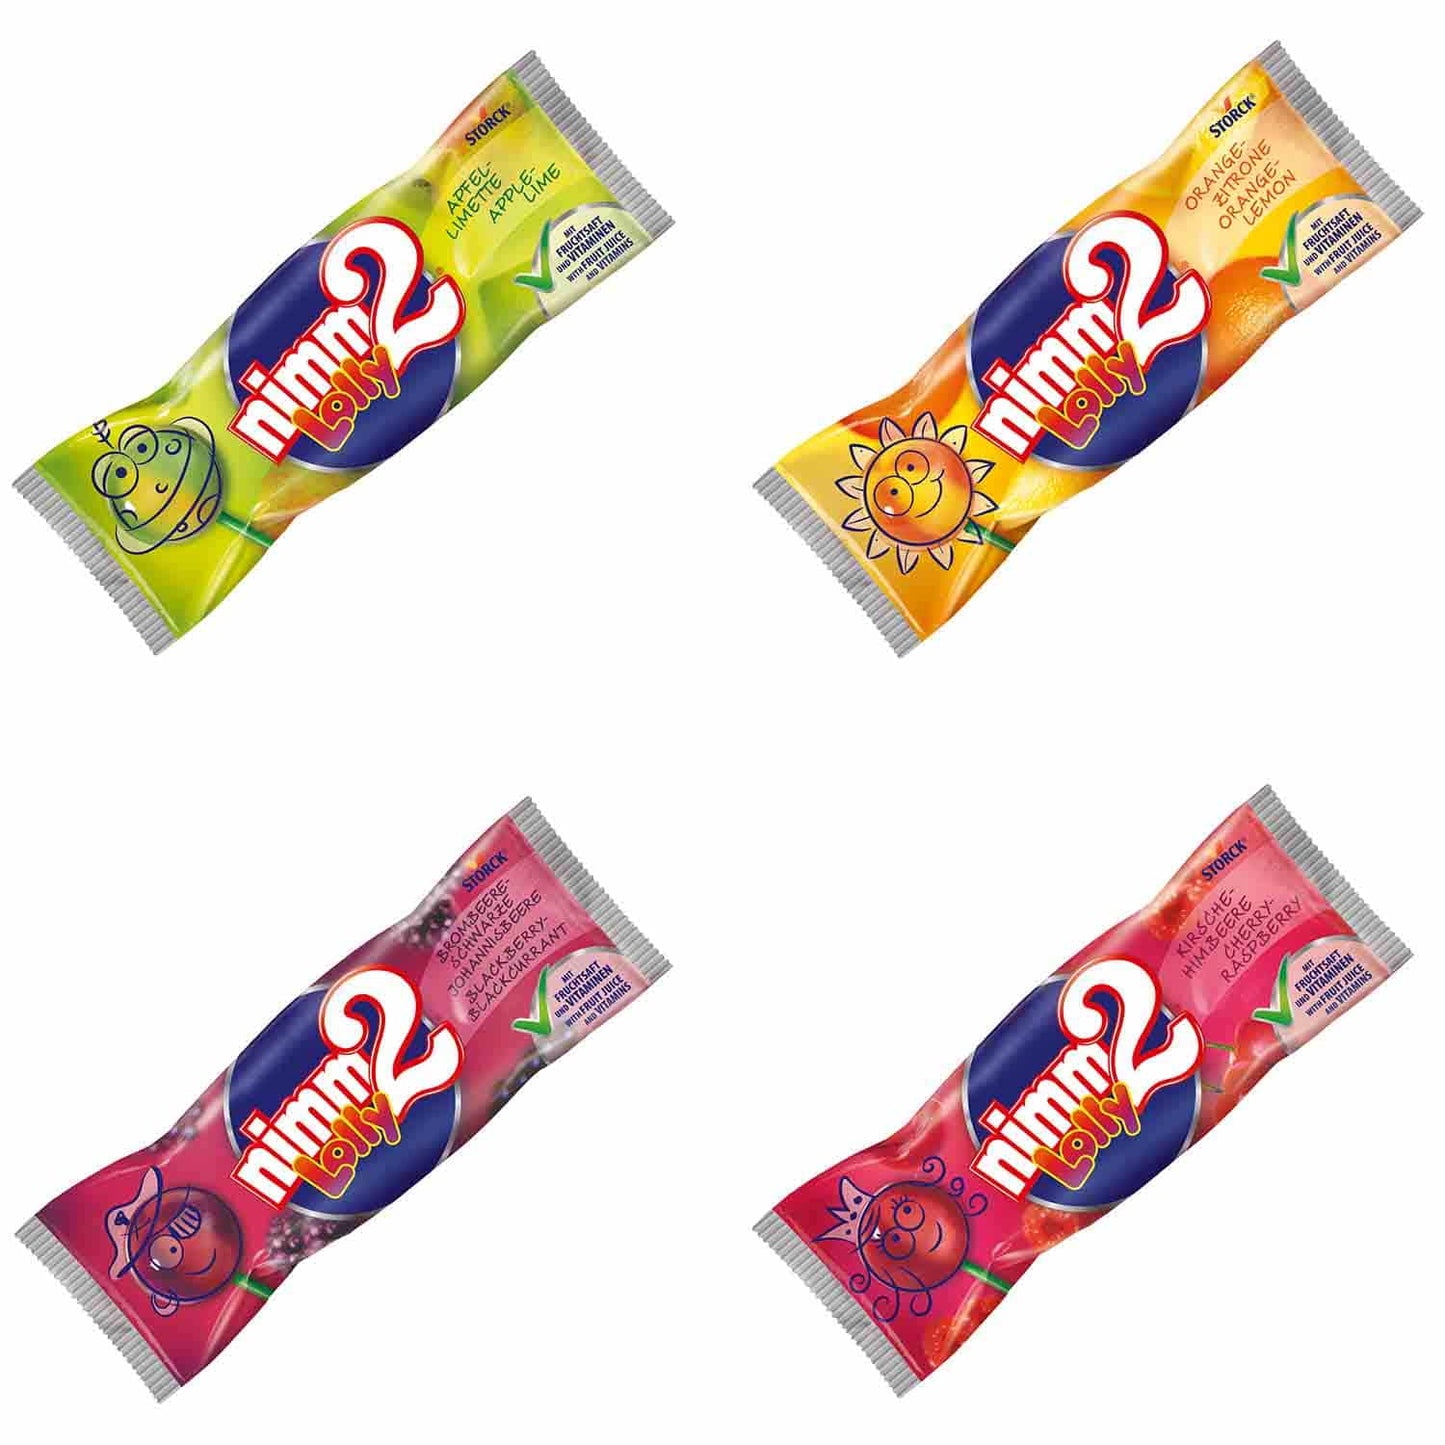 nimm2 Lolly 20 einzeln verpackte Lollis - Candyshop.ch